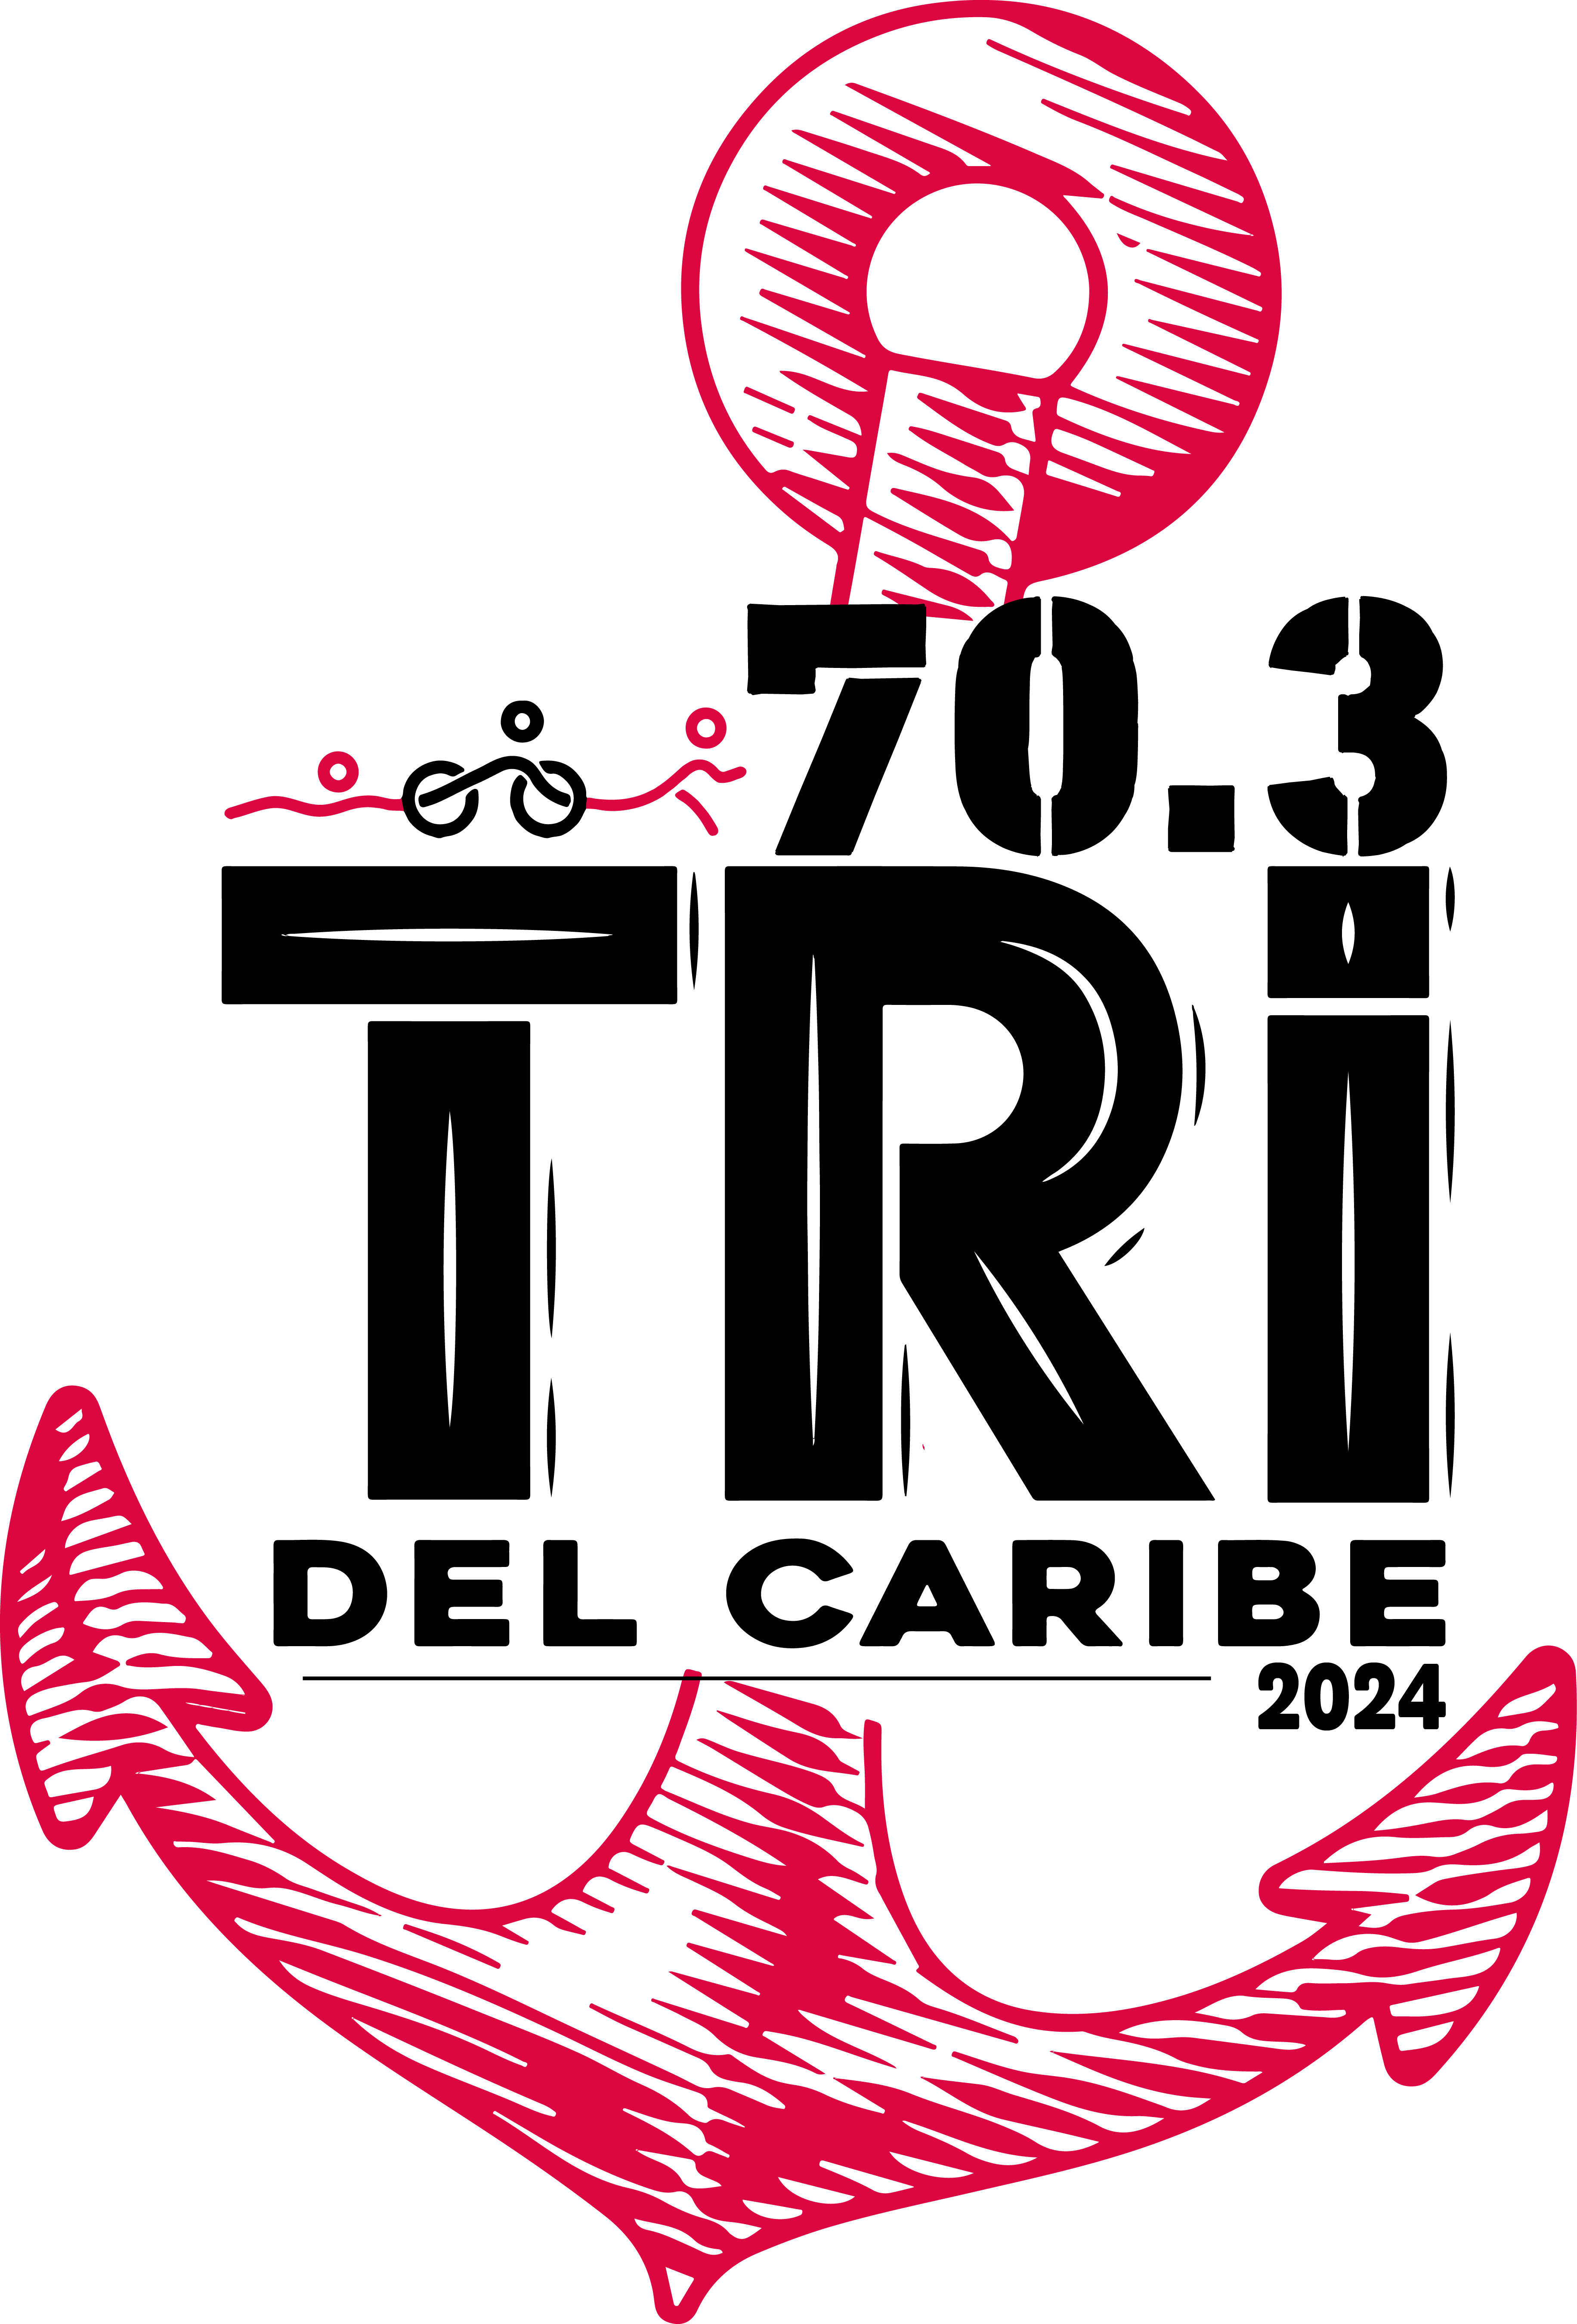 Tri del caribe logo 2022